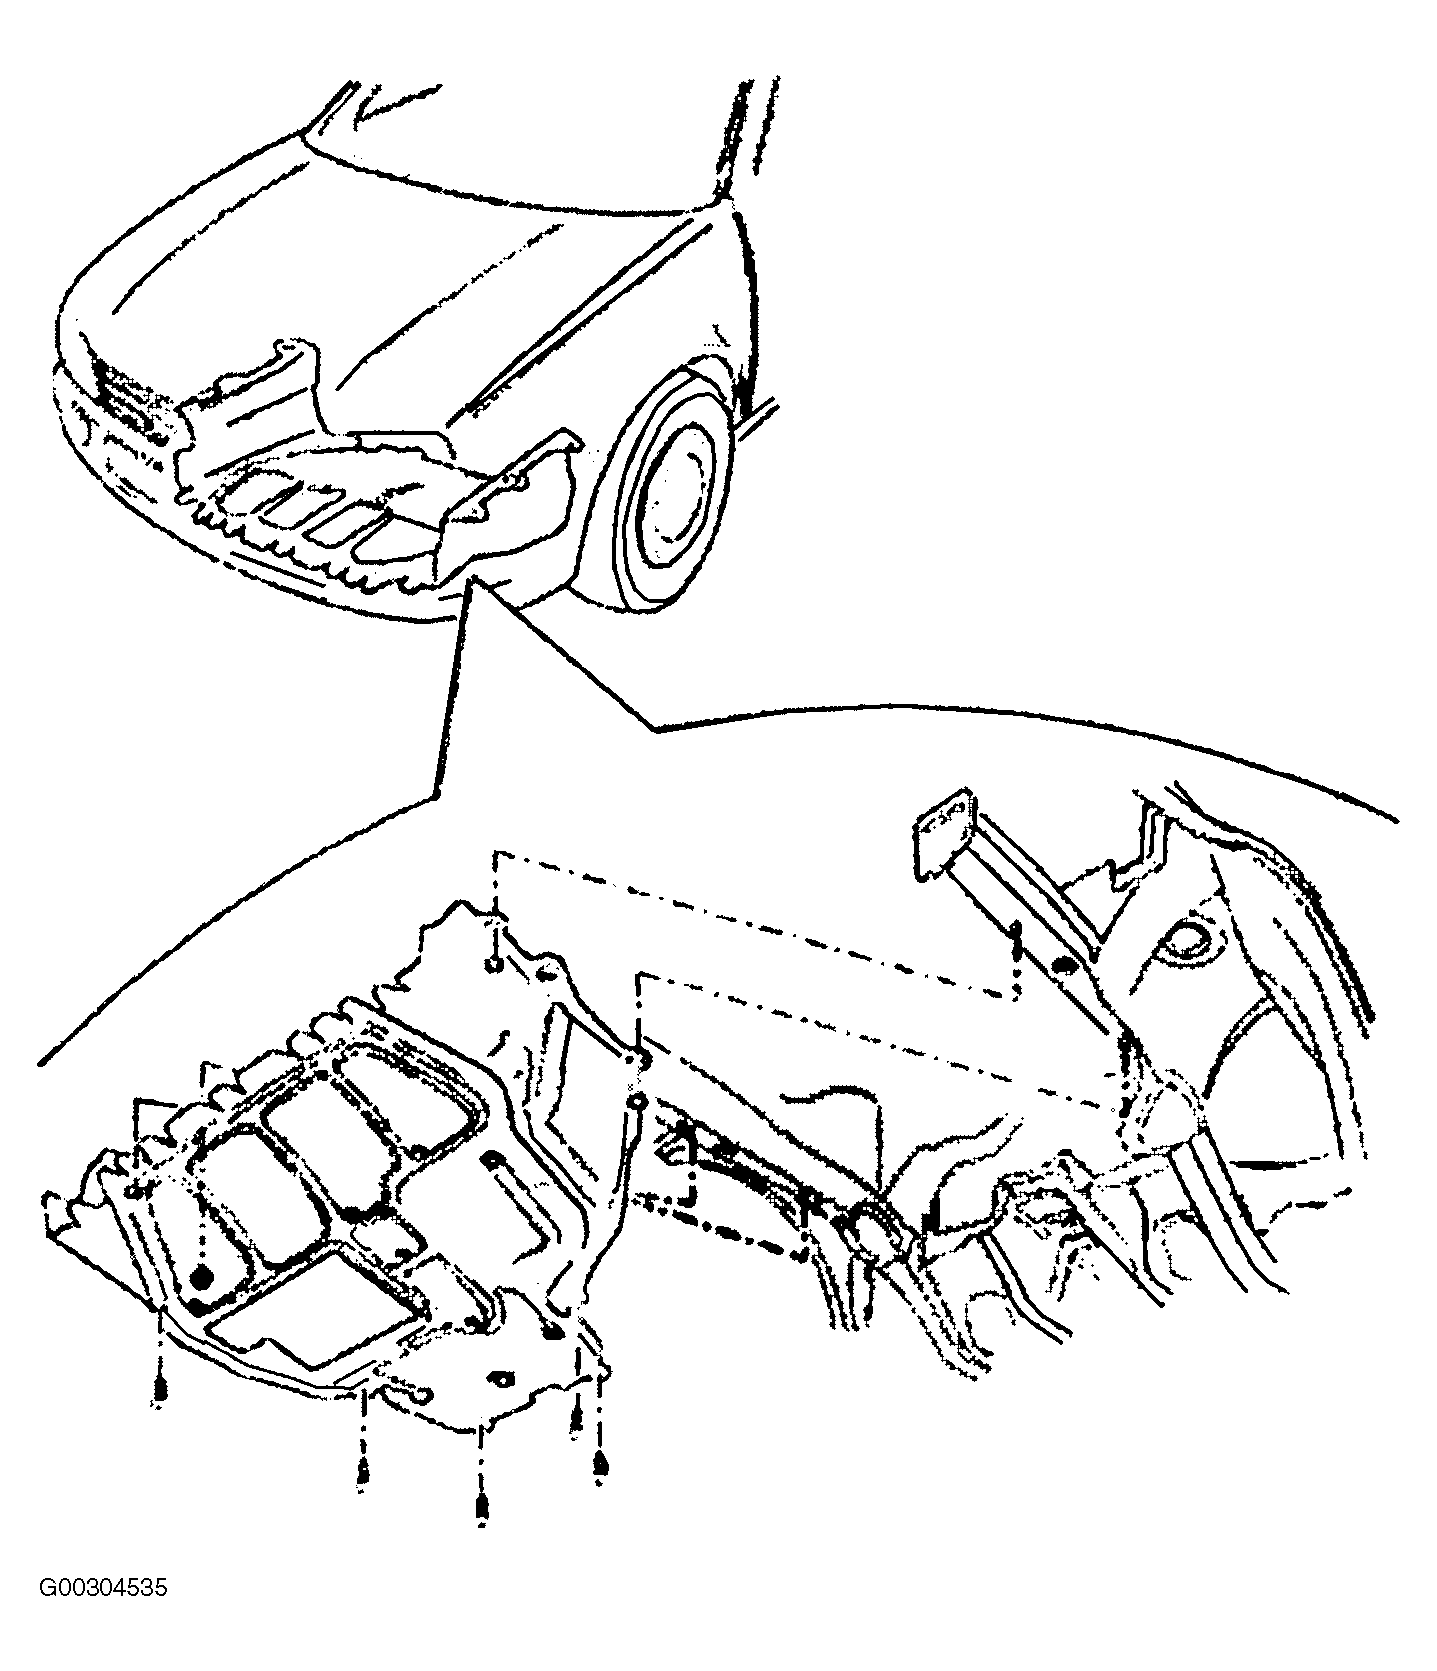 2003 Volkswagen Jetta Serpentine Belt Routing And Timing Belt Diagrams